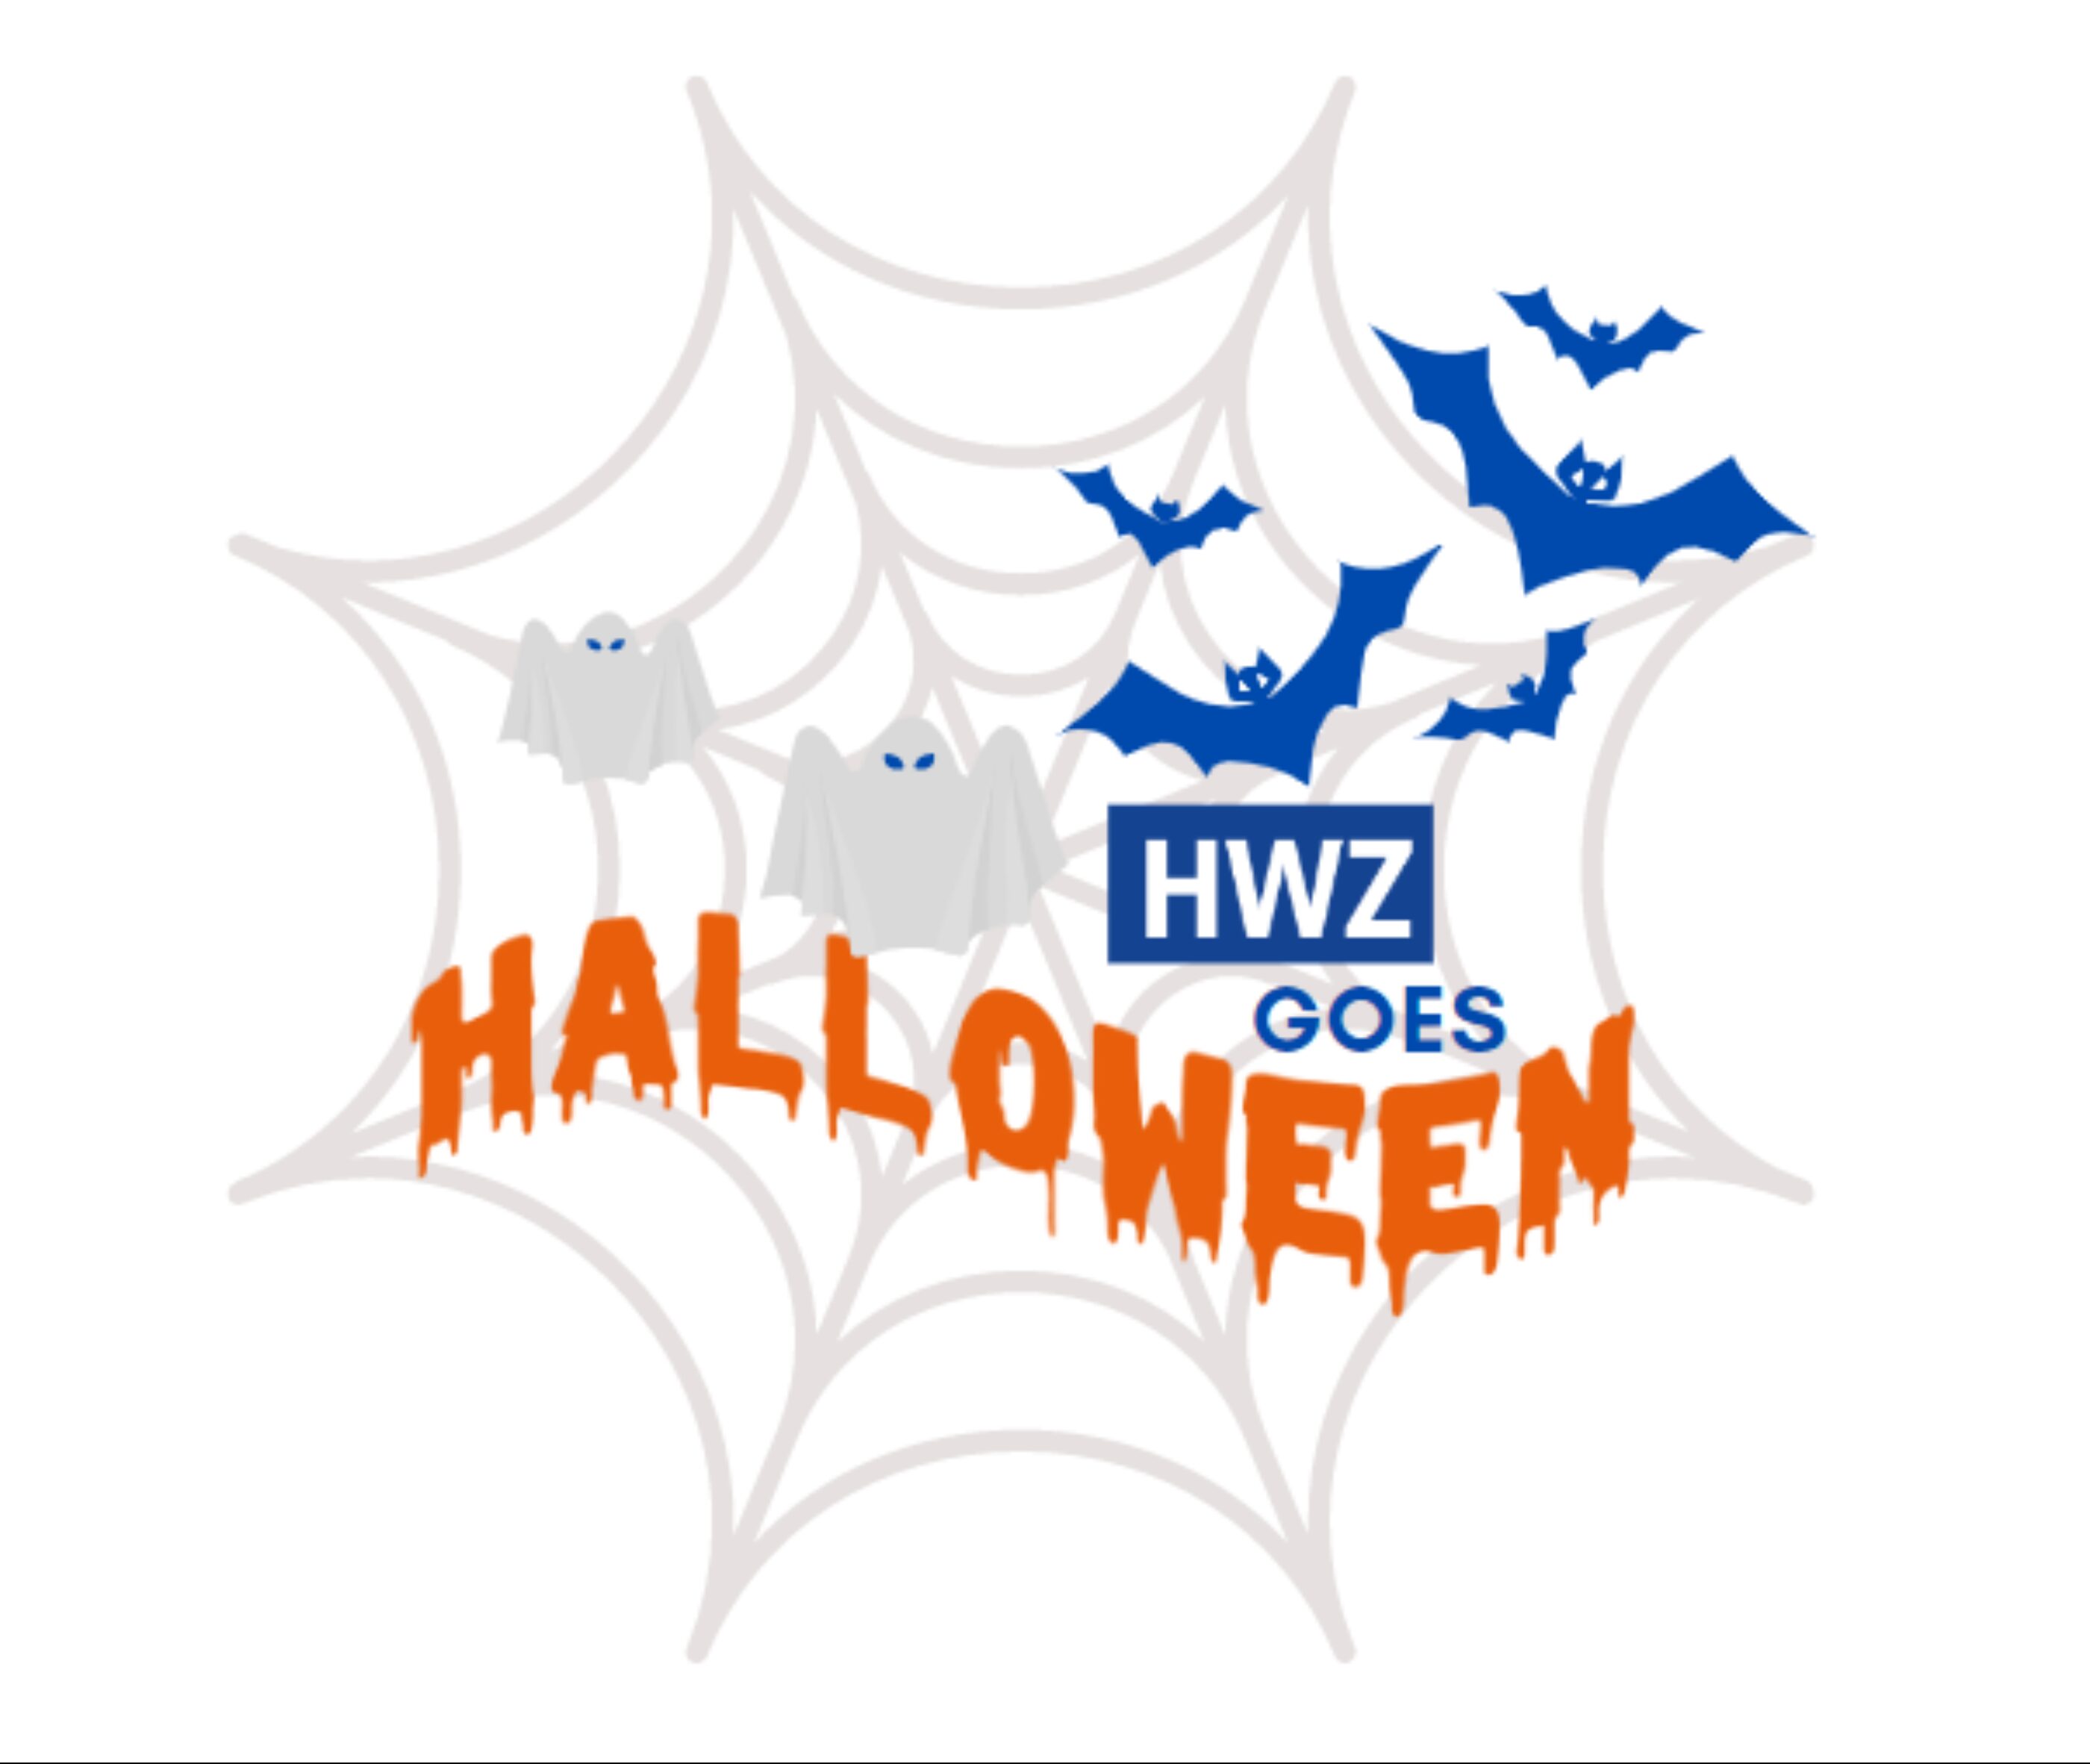 HWZ goes Halloween